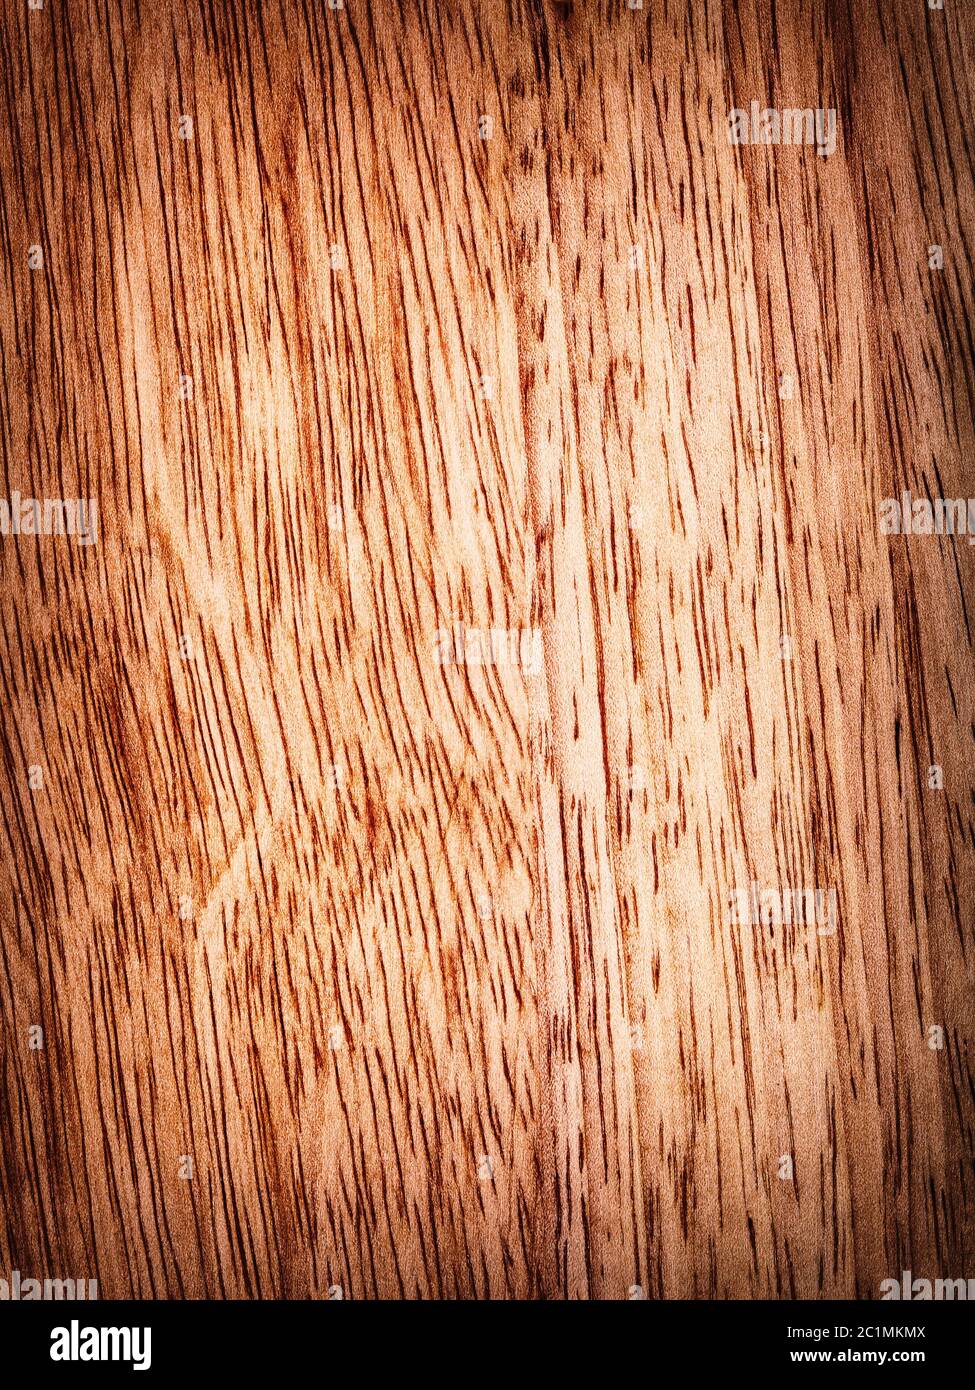 Warm Wooden Texture Stock Photo